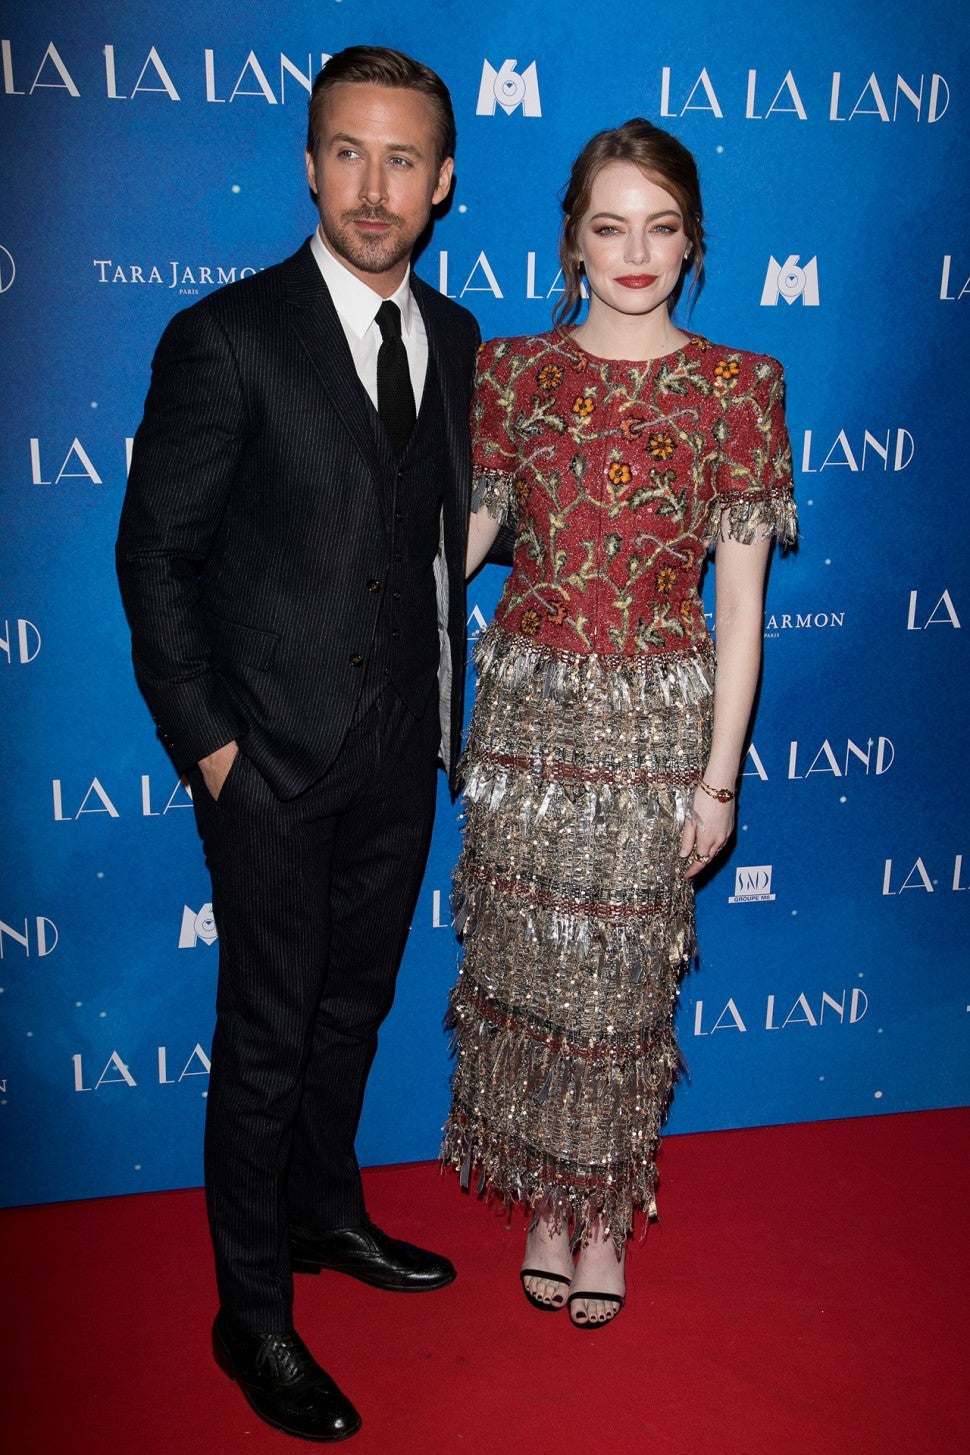 Emma Stone and Ryan Gosling Attend Paris 'La La Land' Premiere